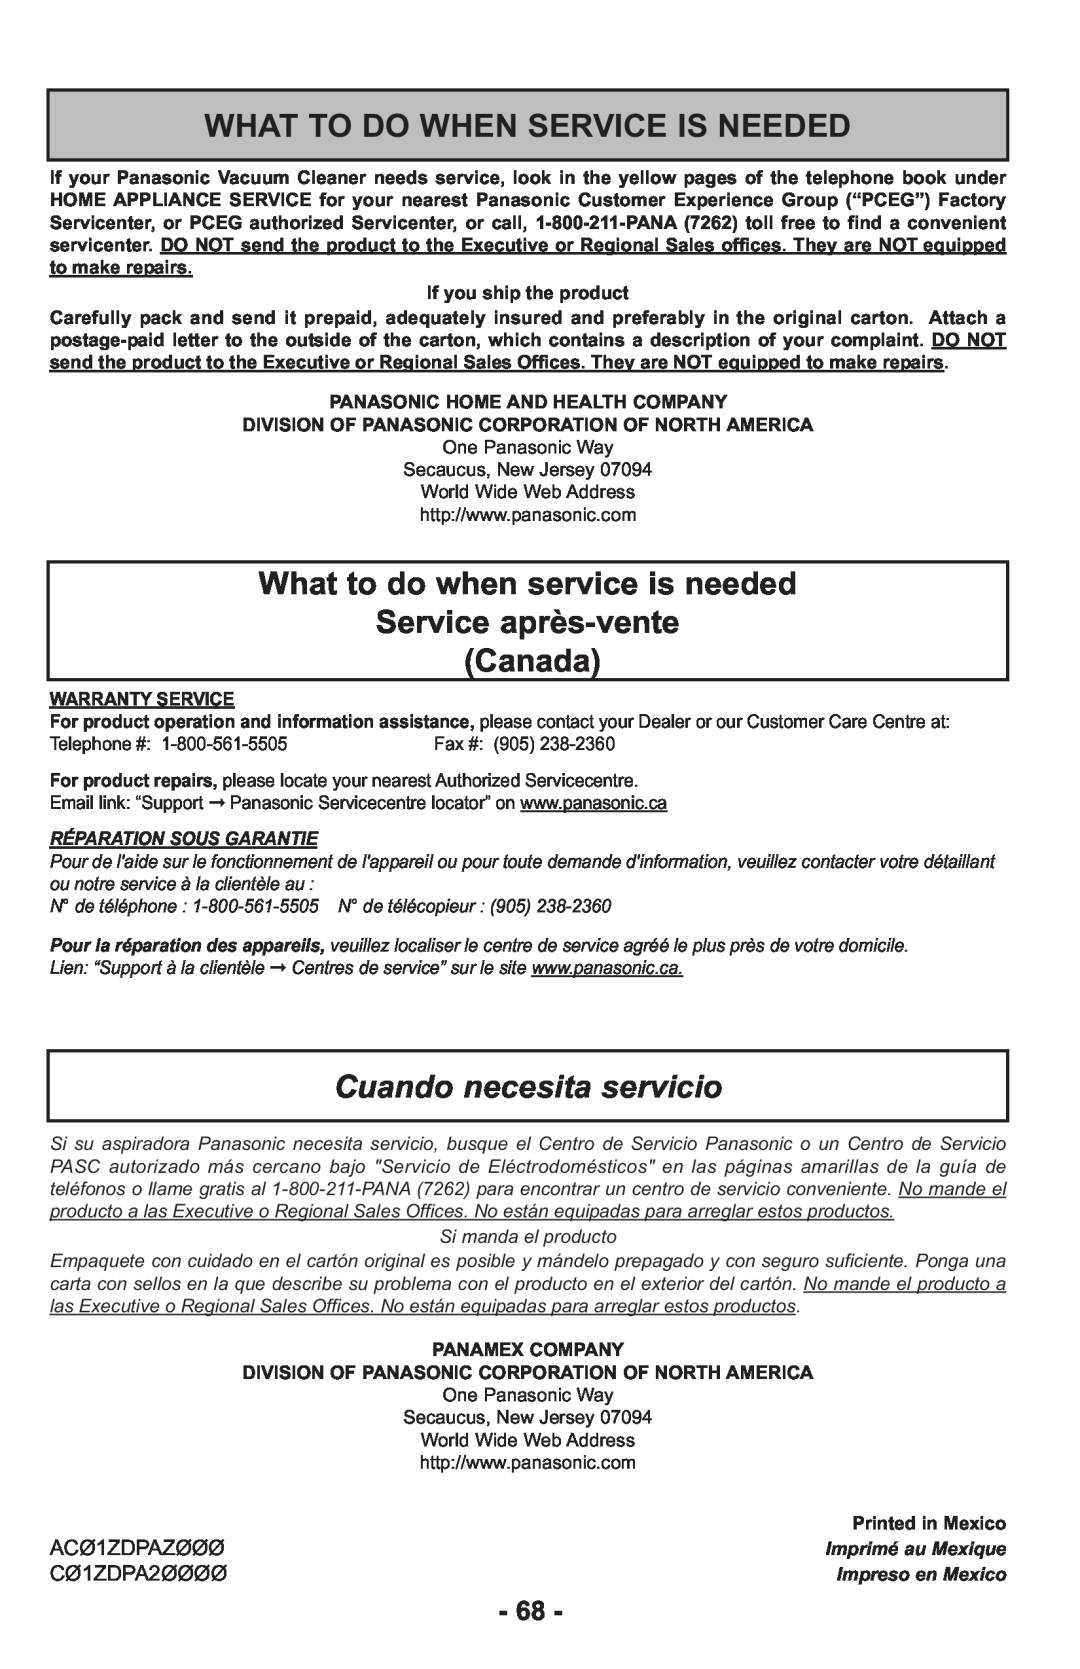 Panasonic MCUL815 What To Do When Service Is Needed, What to do when service is needed, Service après-venteCanada 